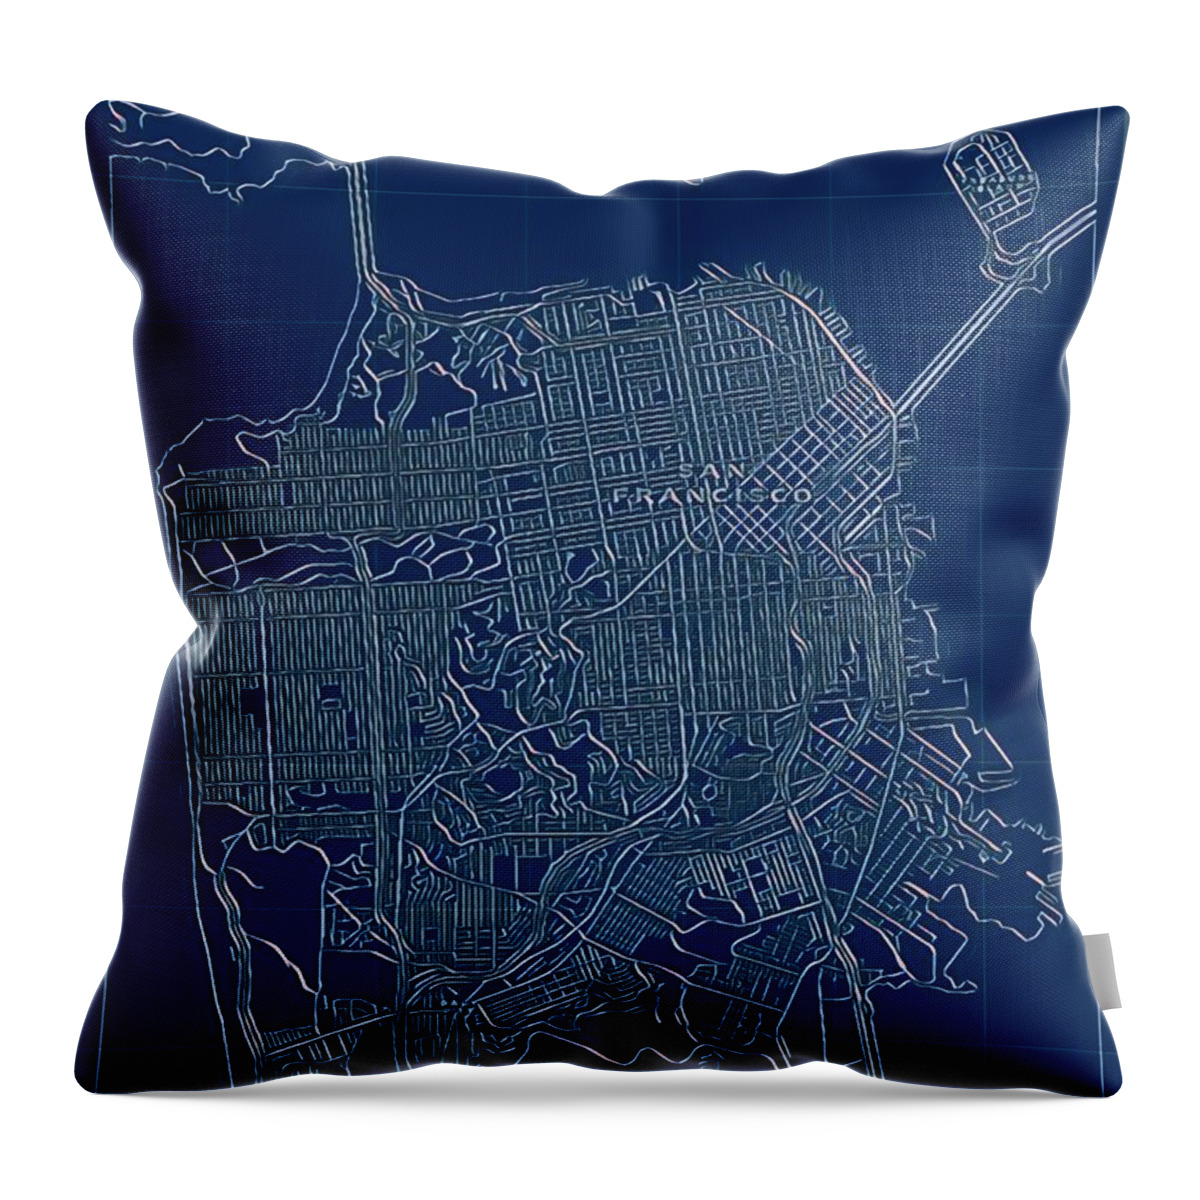  Frisco Throw Pillow featuring the digital art San Francisco Blueprint City Map by HELGE Art Gallery